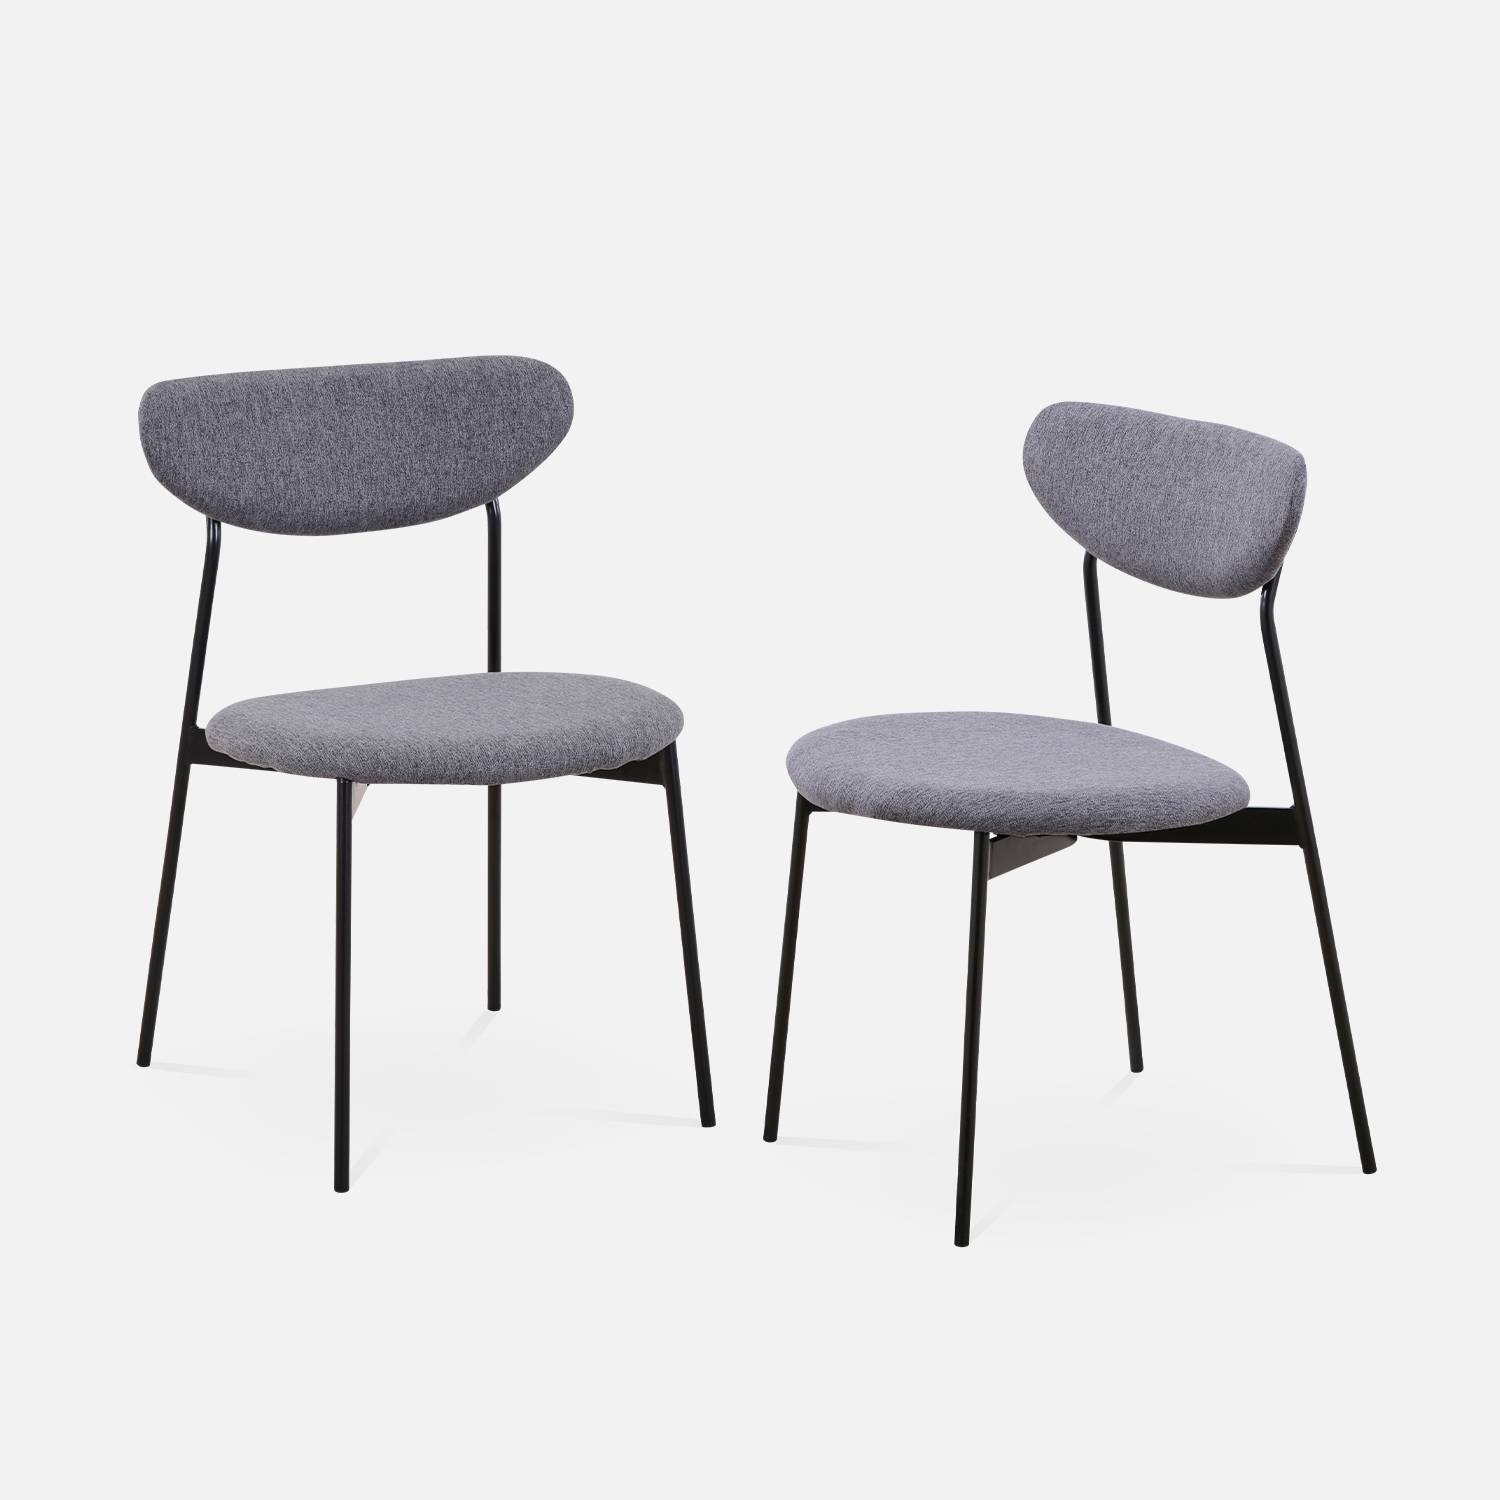 Set of 2 retro style dining chairs with steel legs, Dark Grey | sweeek